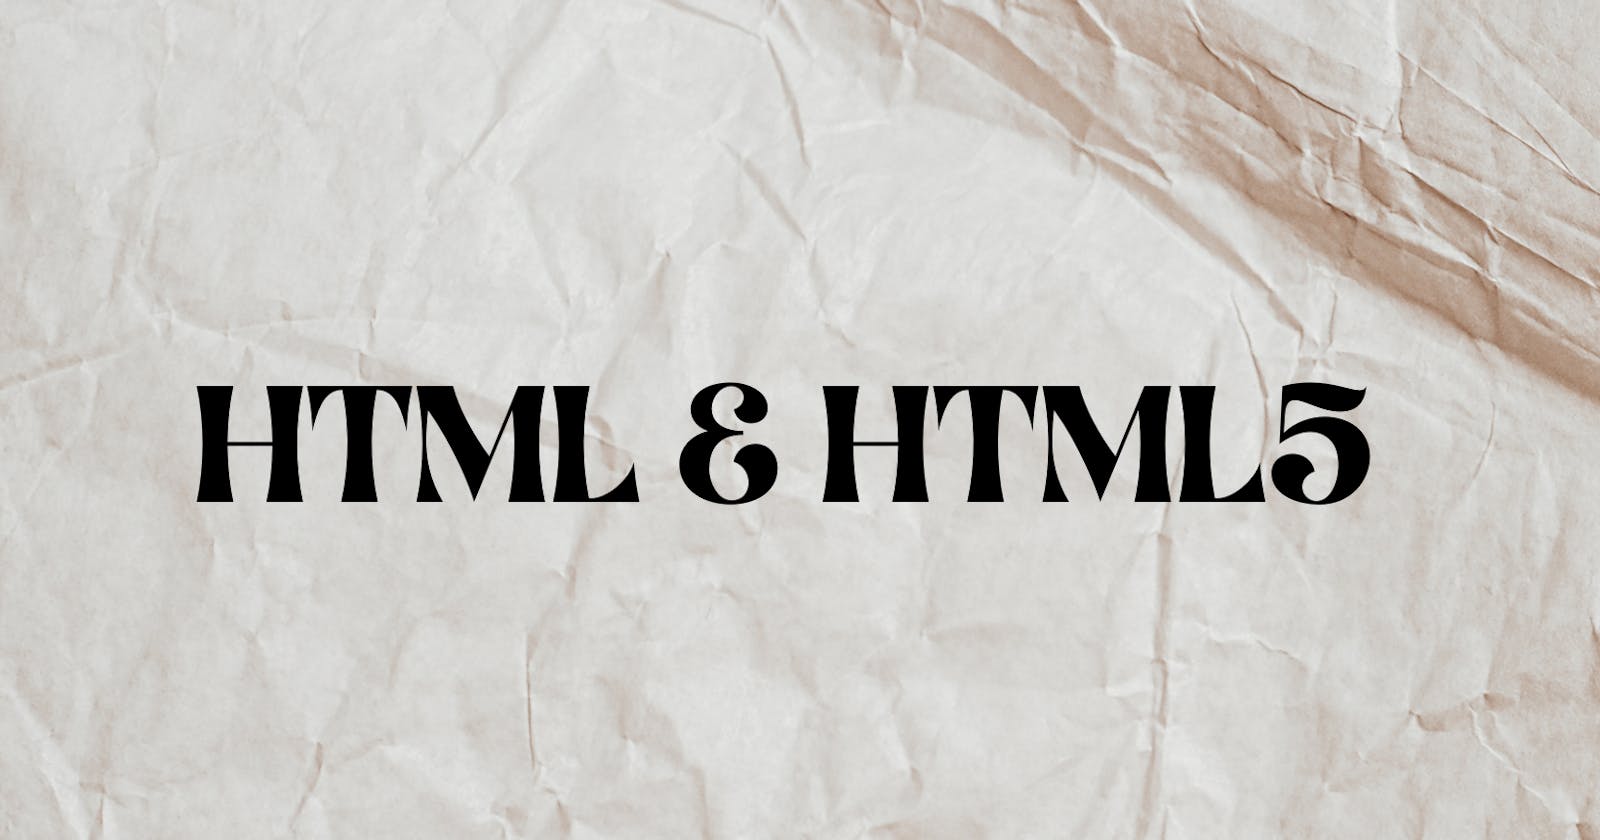 Walkthrough of HTML & HTML5